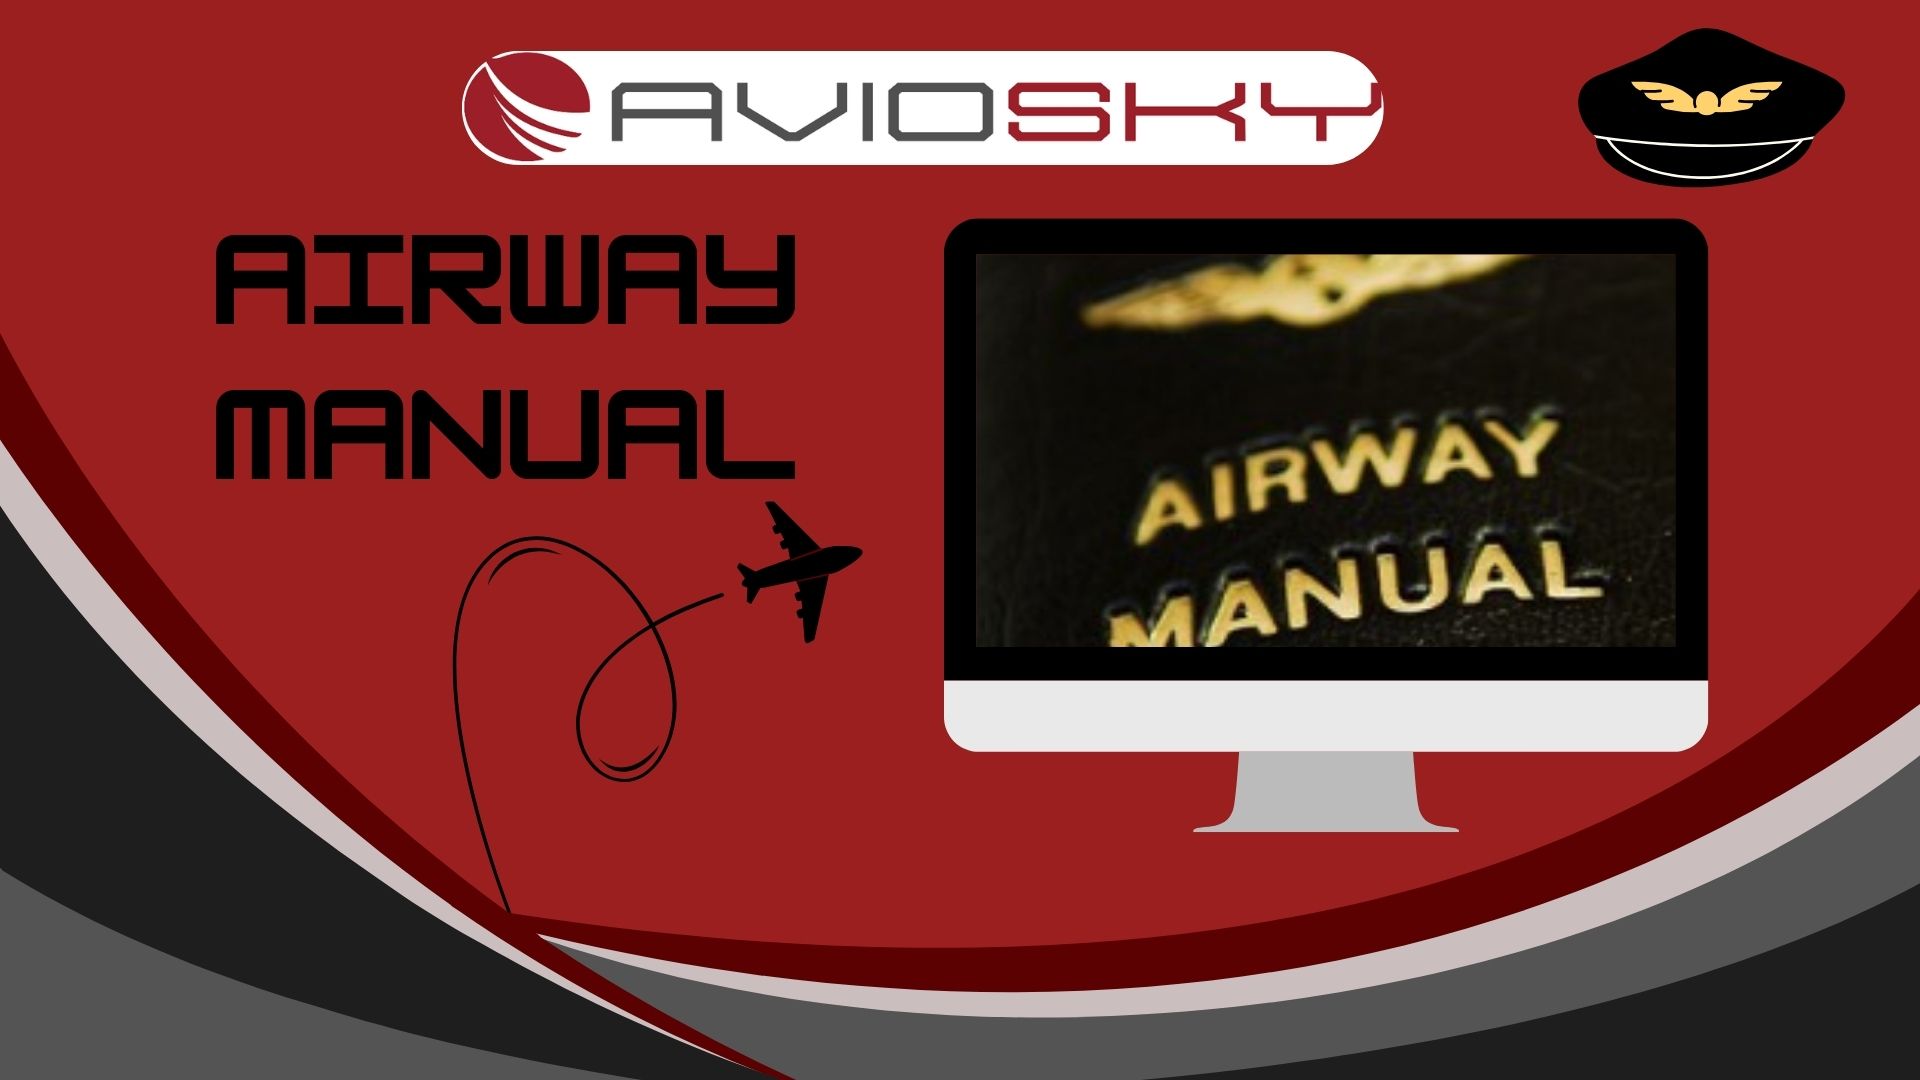 Aviosky website banner Airway